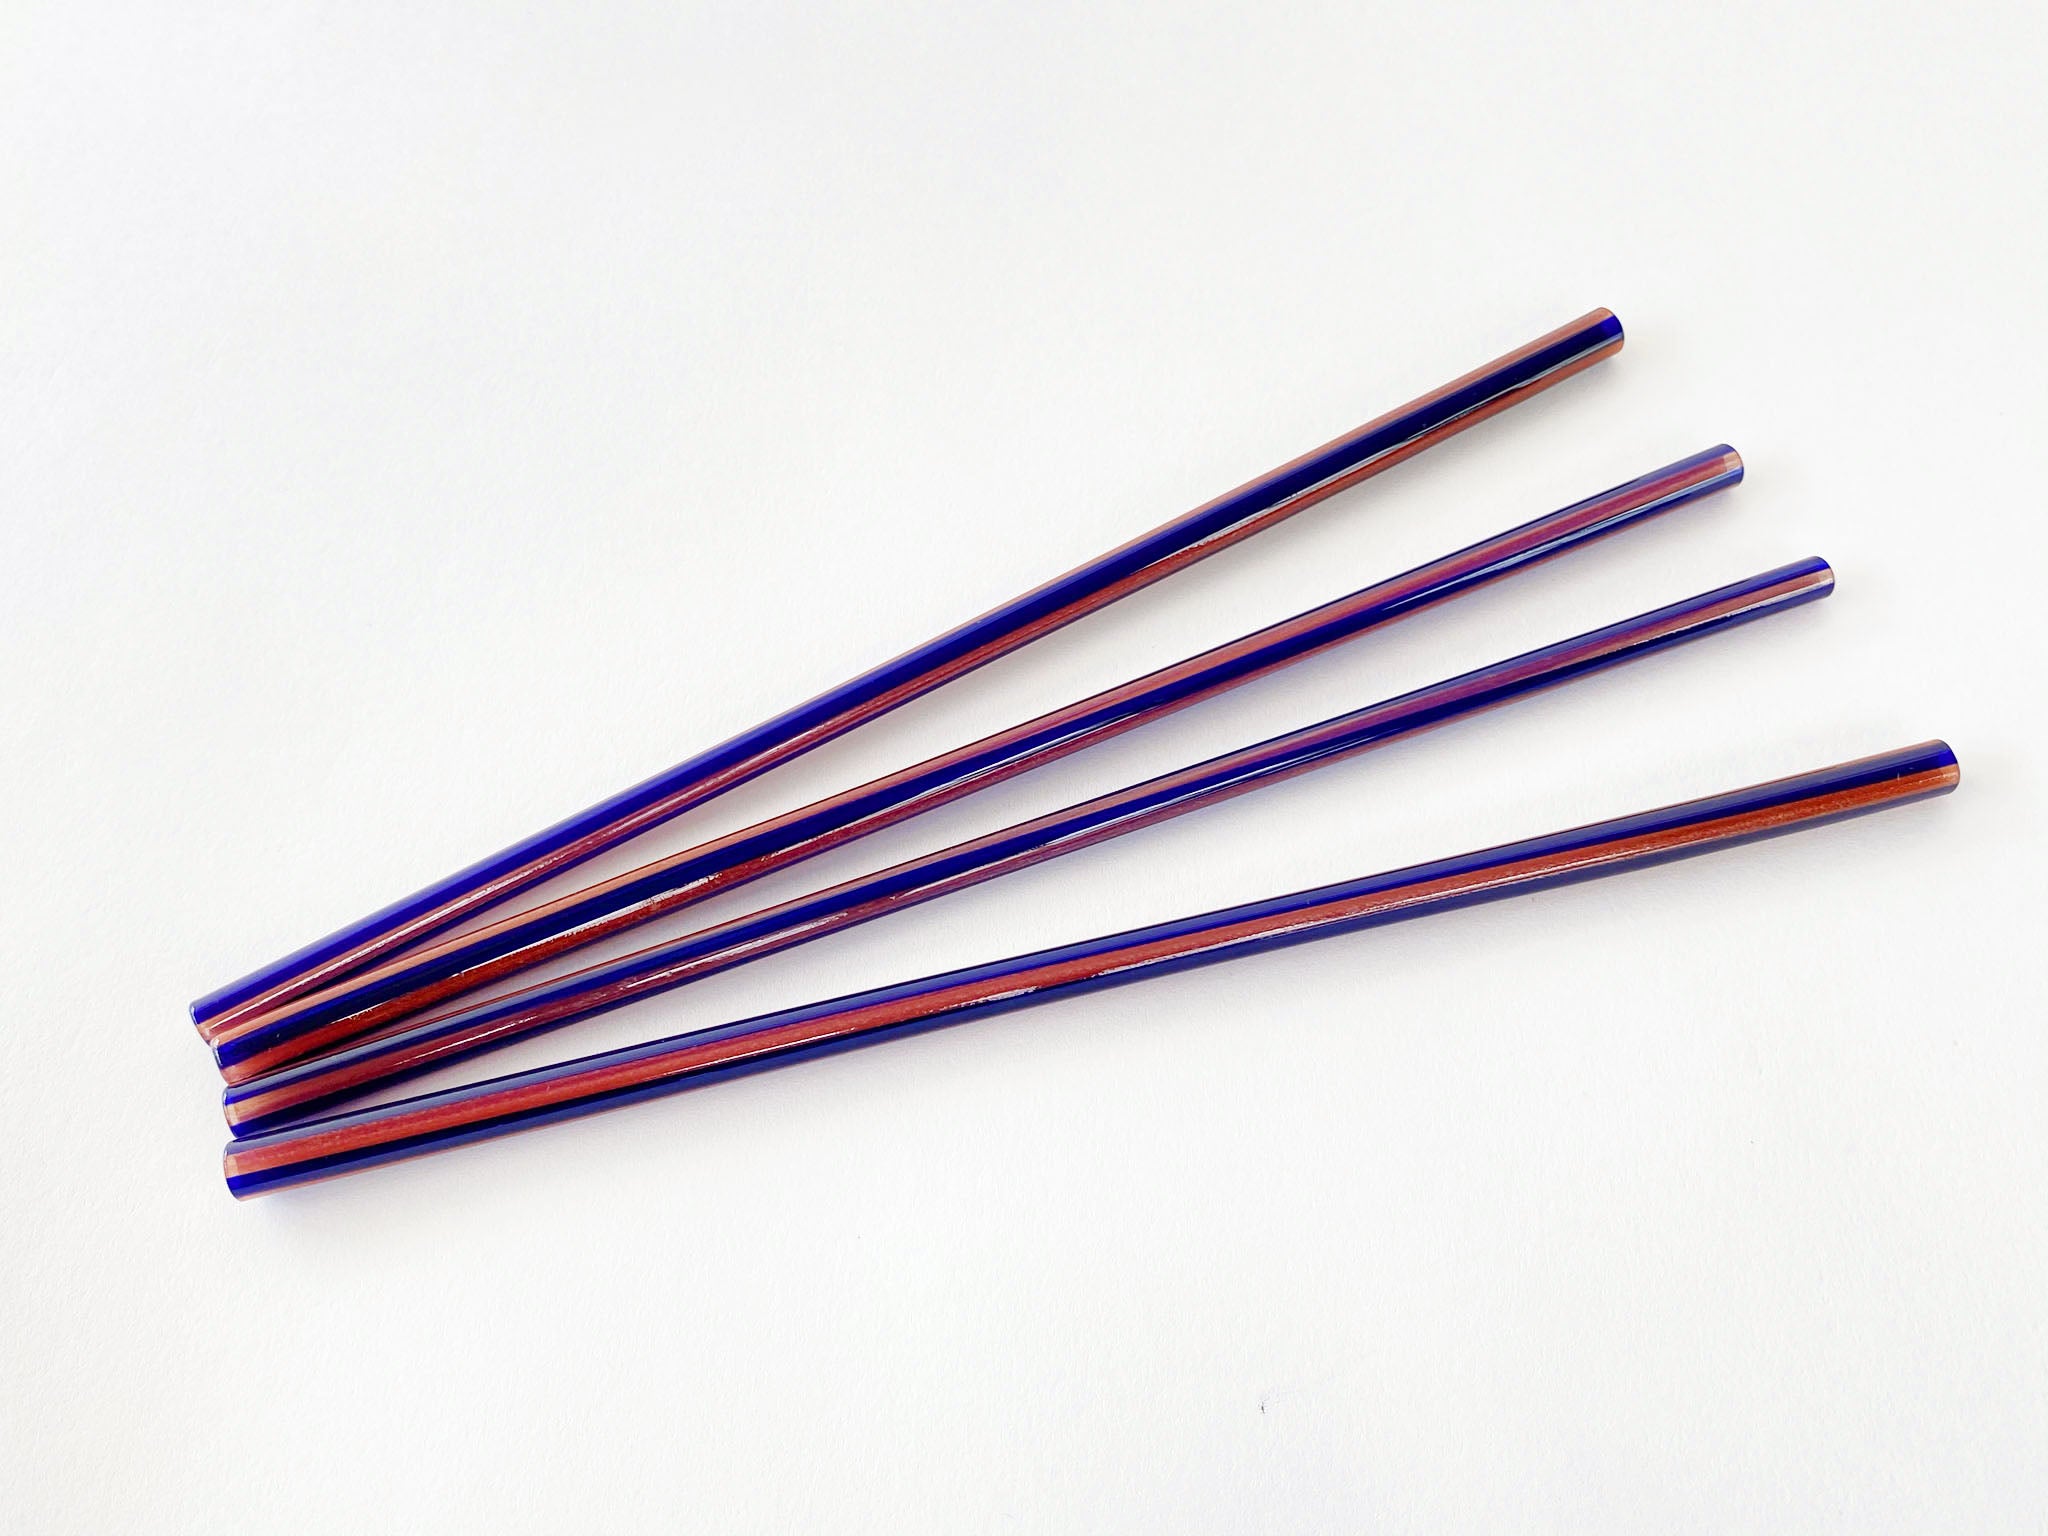 Straight Glass Straw – Created By Christine